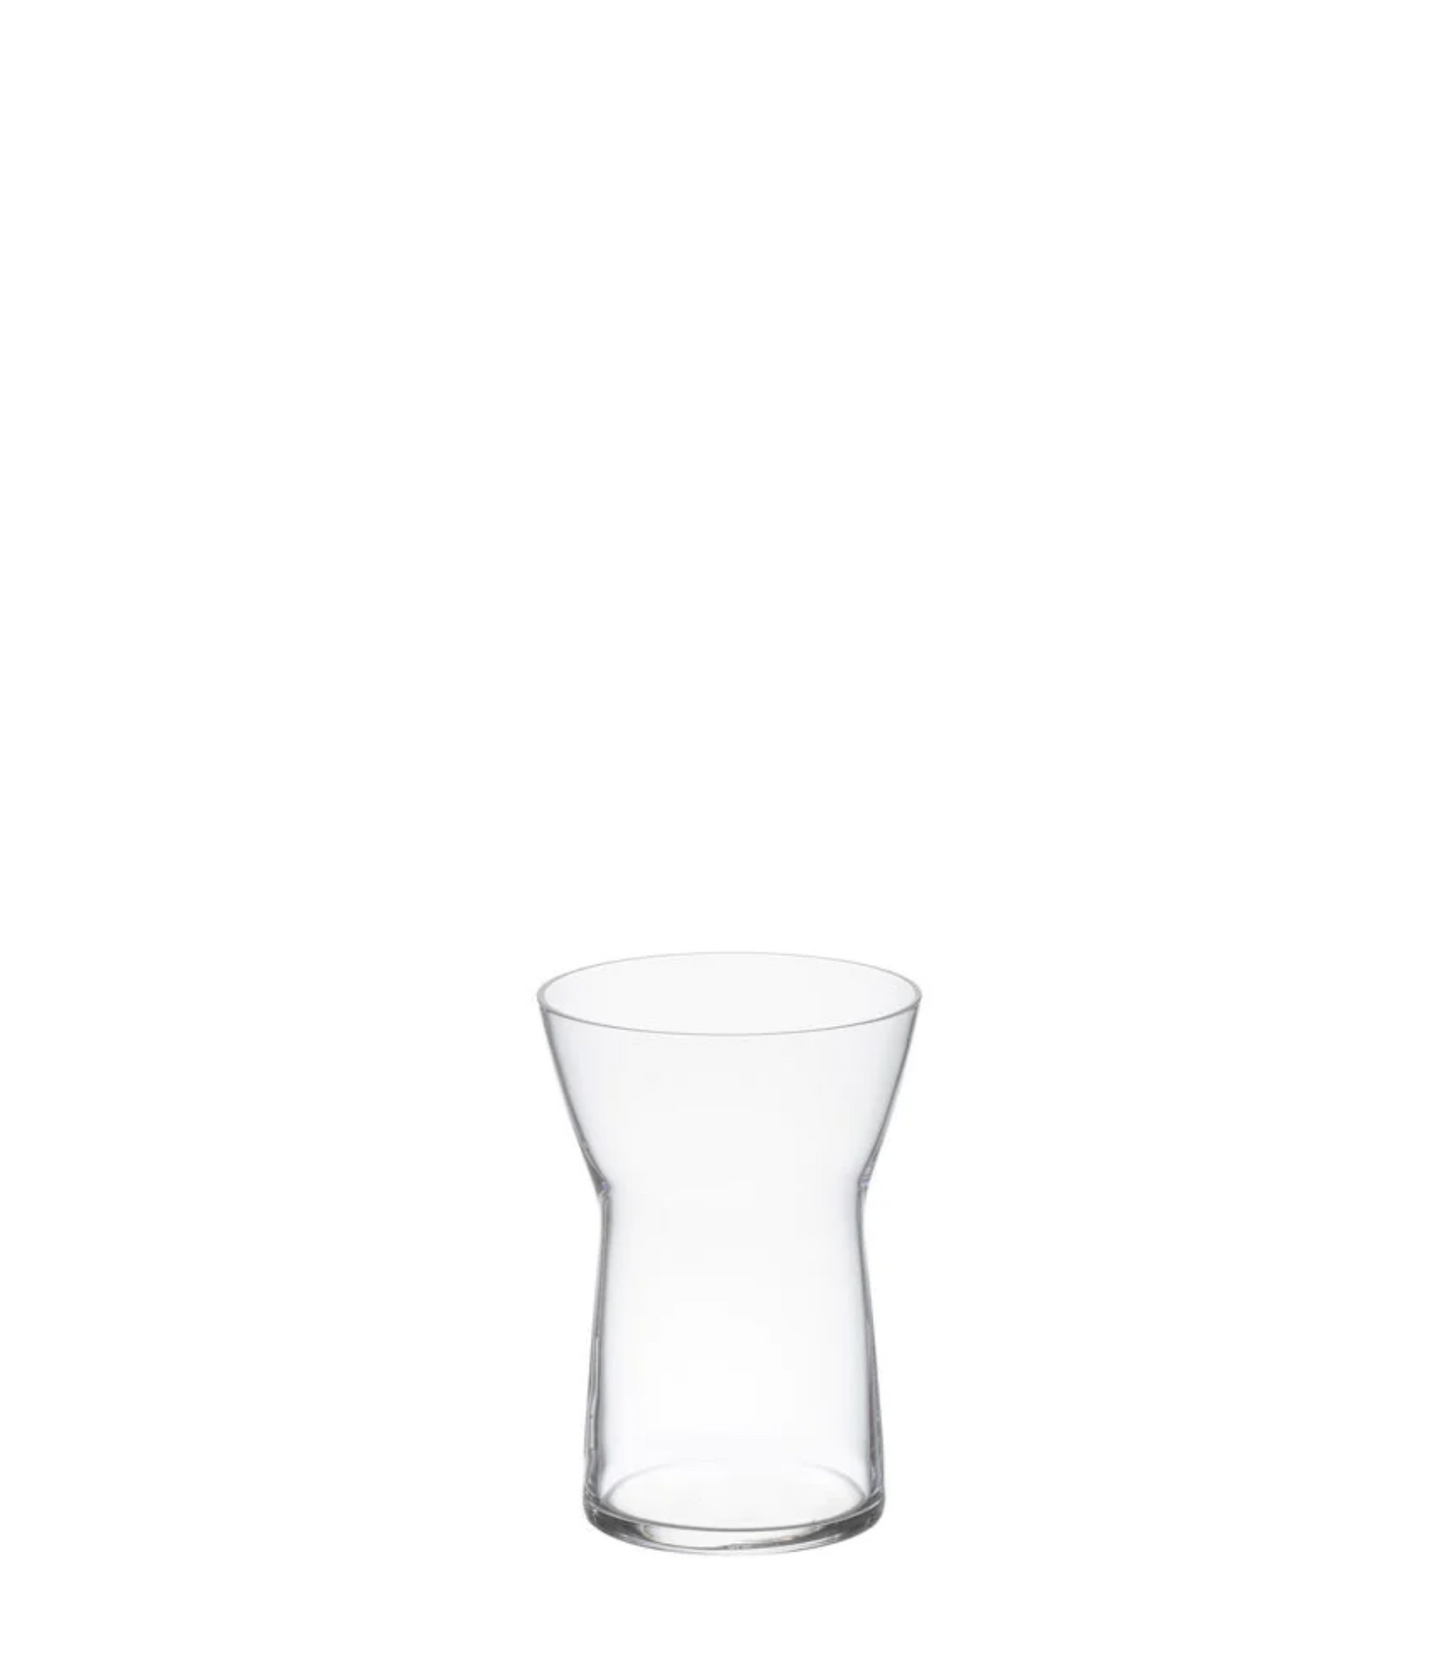 Kimura Glass Everyday use glass TU106 designed by Tora Urup